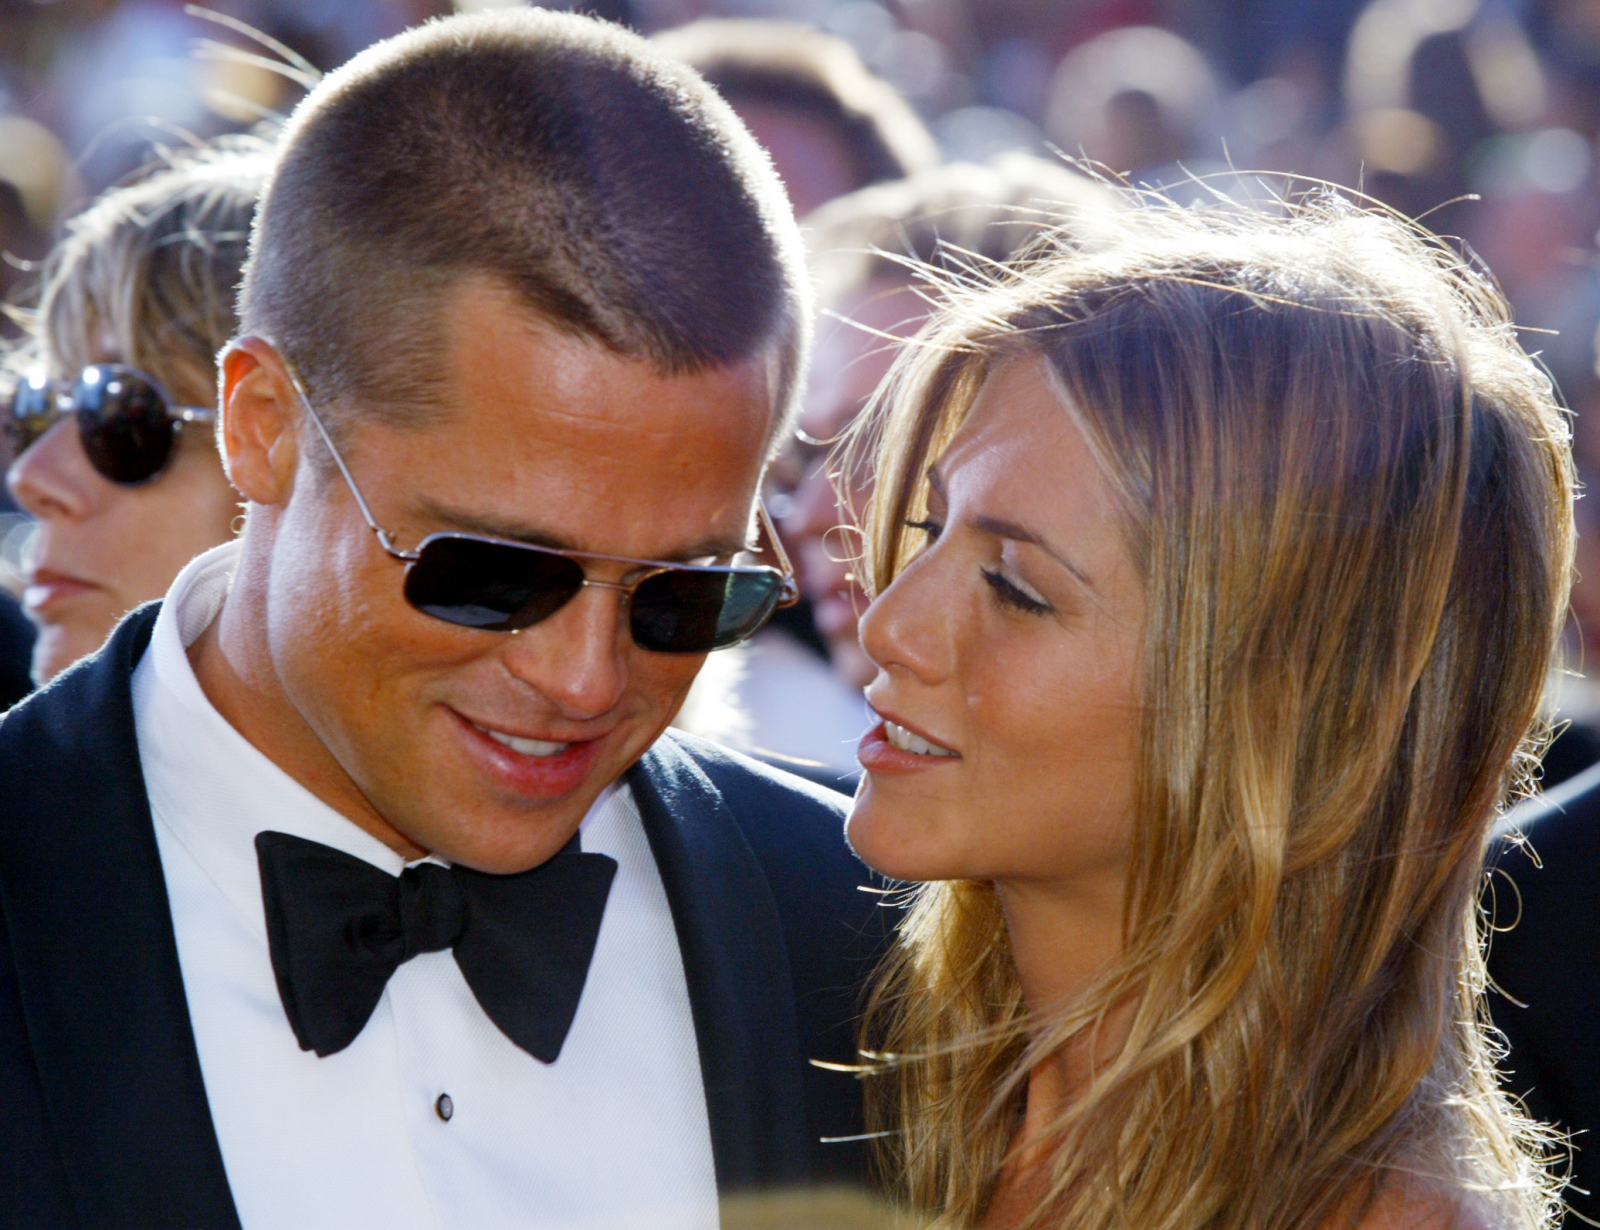 Dating aniston brad jennifer pitt Brad Pitt